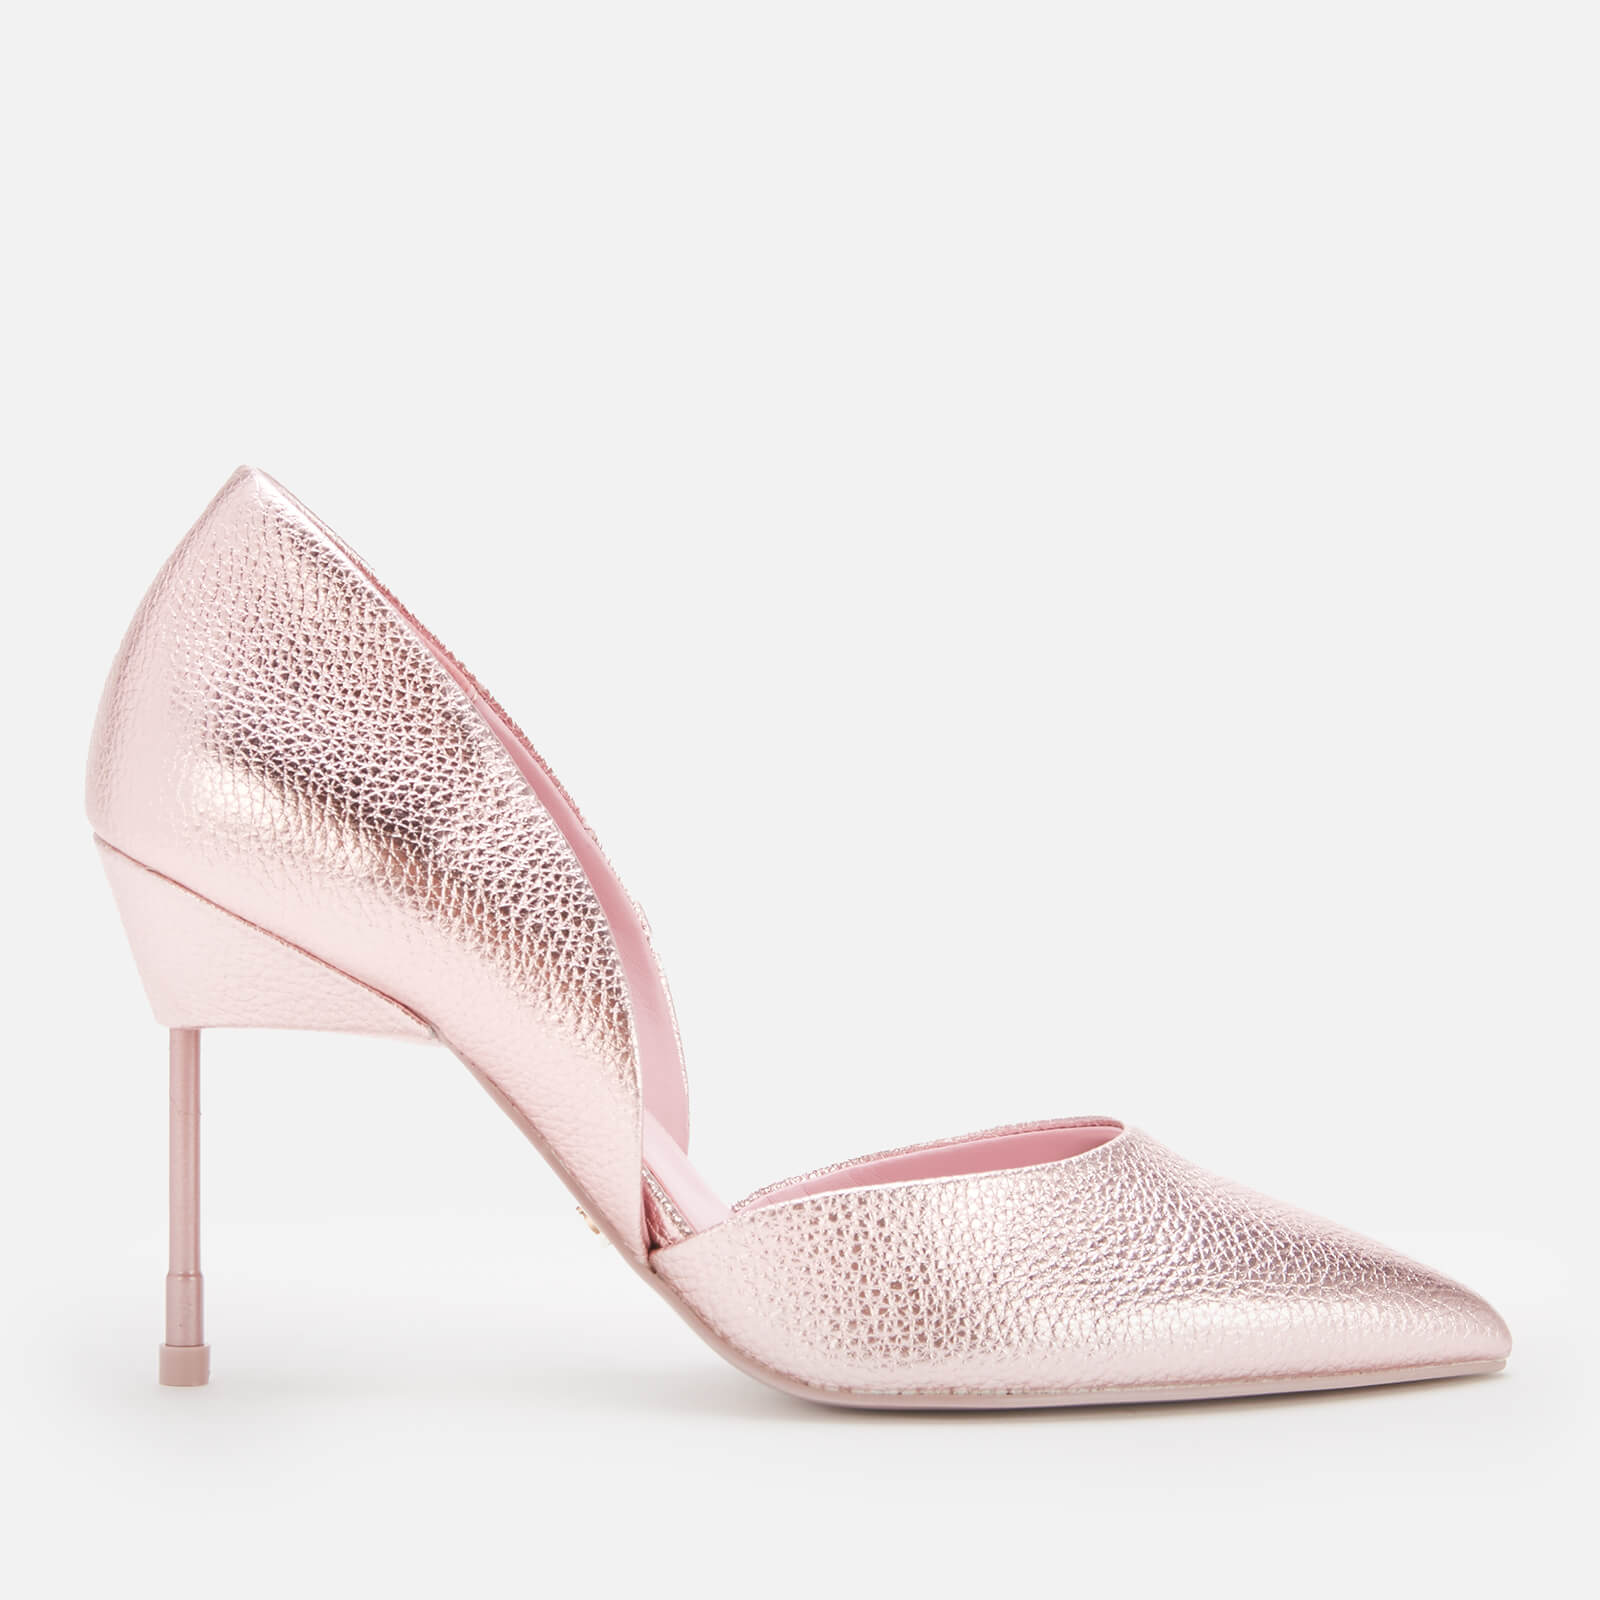 kurt geiger london women's bond 90 drench leather court shoes - pink - uk 8